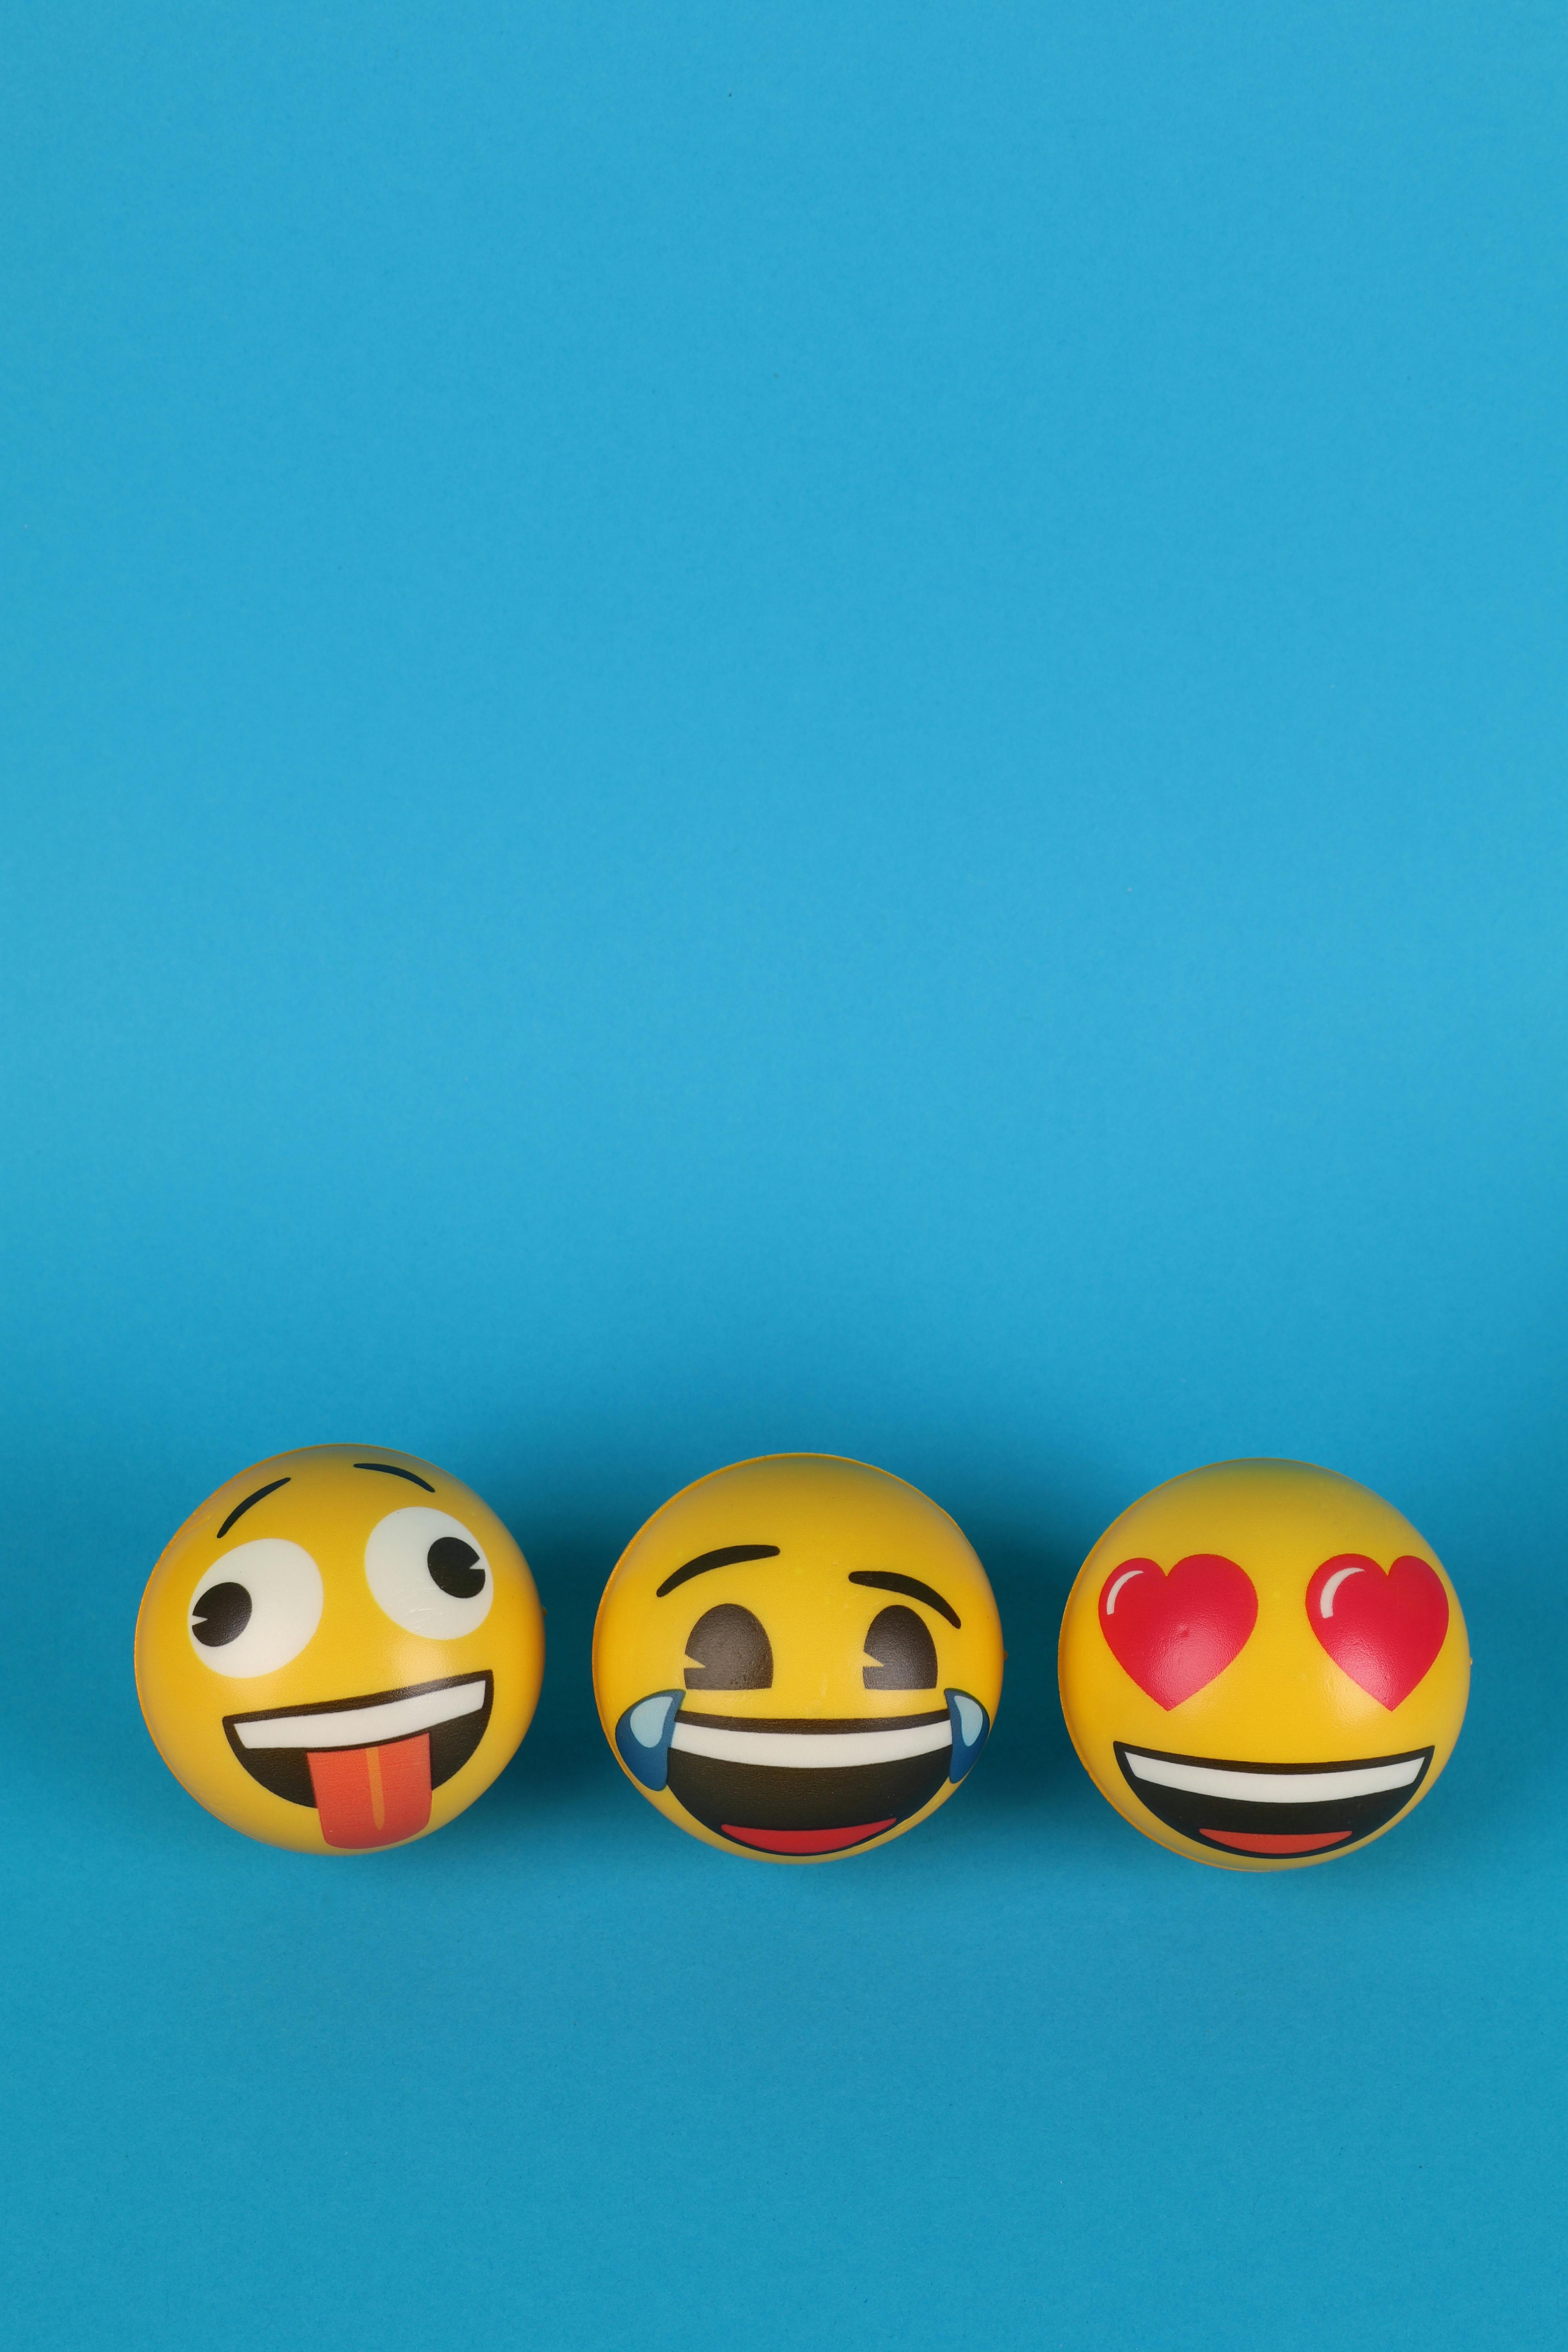 Smile Emoji wallpaper by MrFam0us  Download on ZEDGE  db01